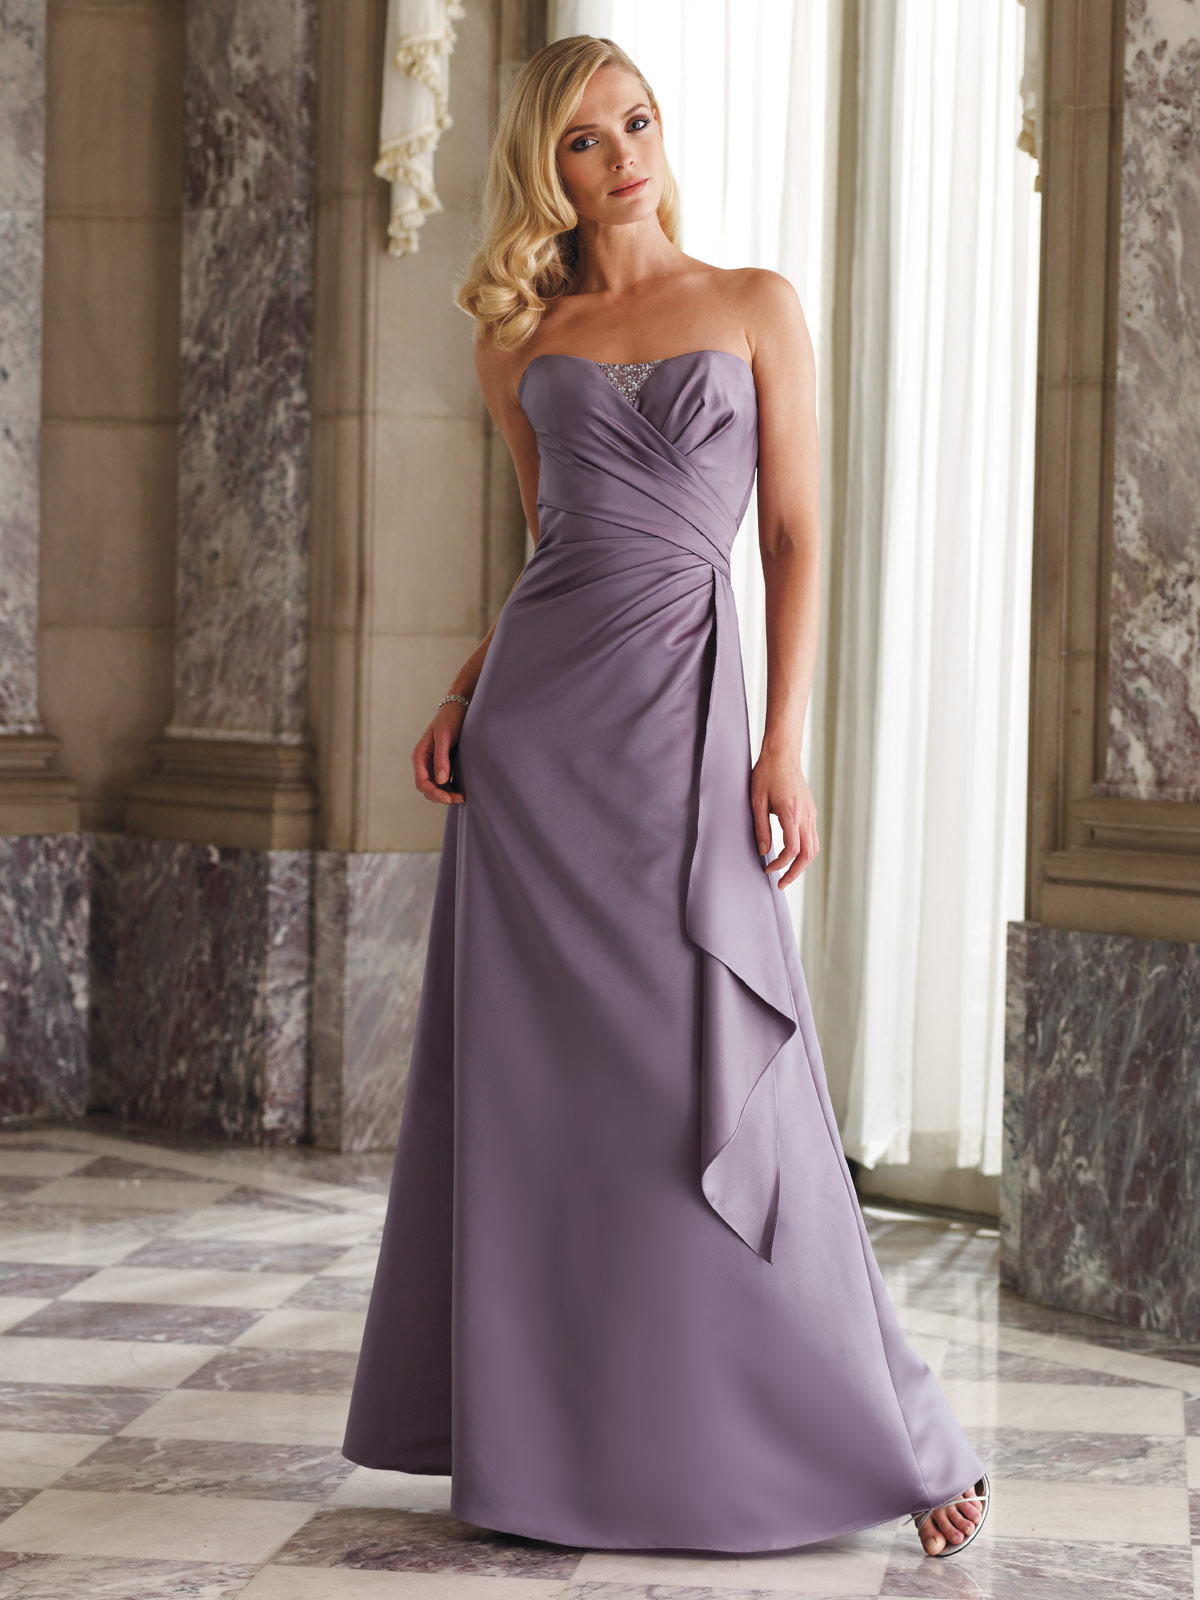 short prom dresses: Sophia Tolli 2012 Bridesmaids Collection